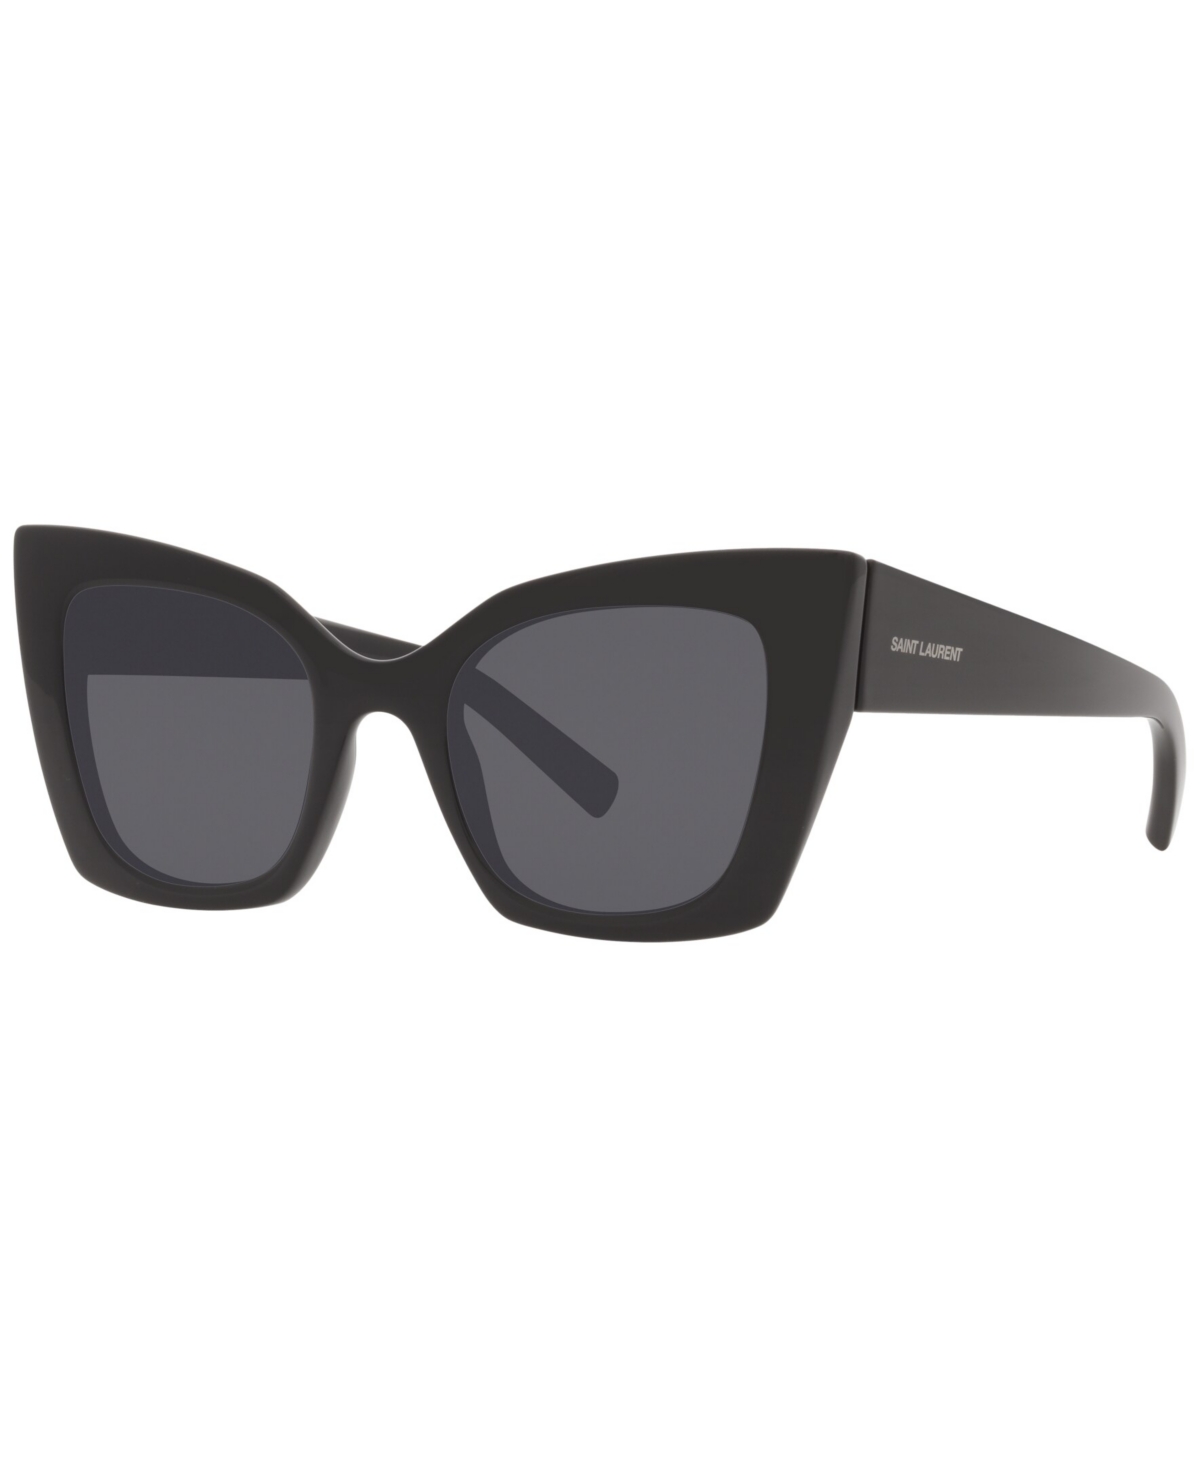 Saint Laurent Women's Sunglasses, Sl 552 In Black